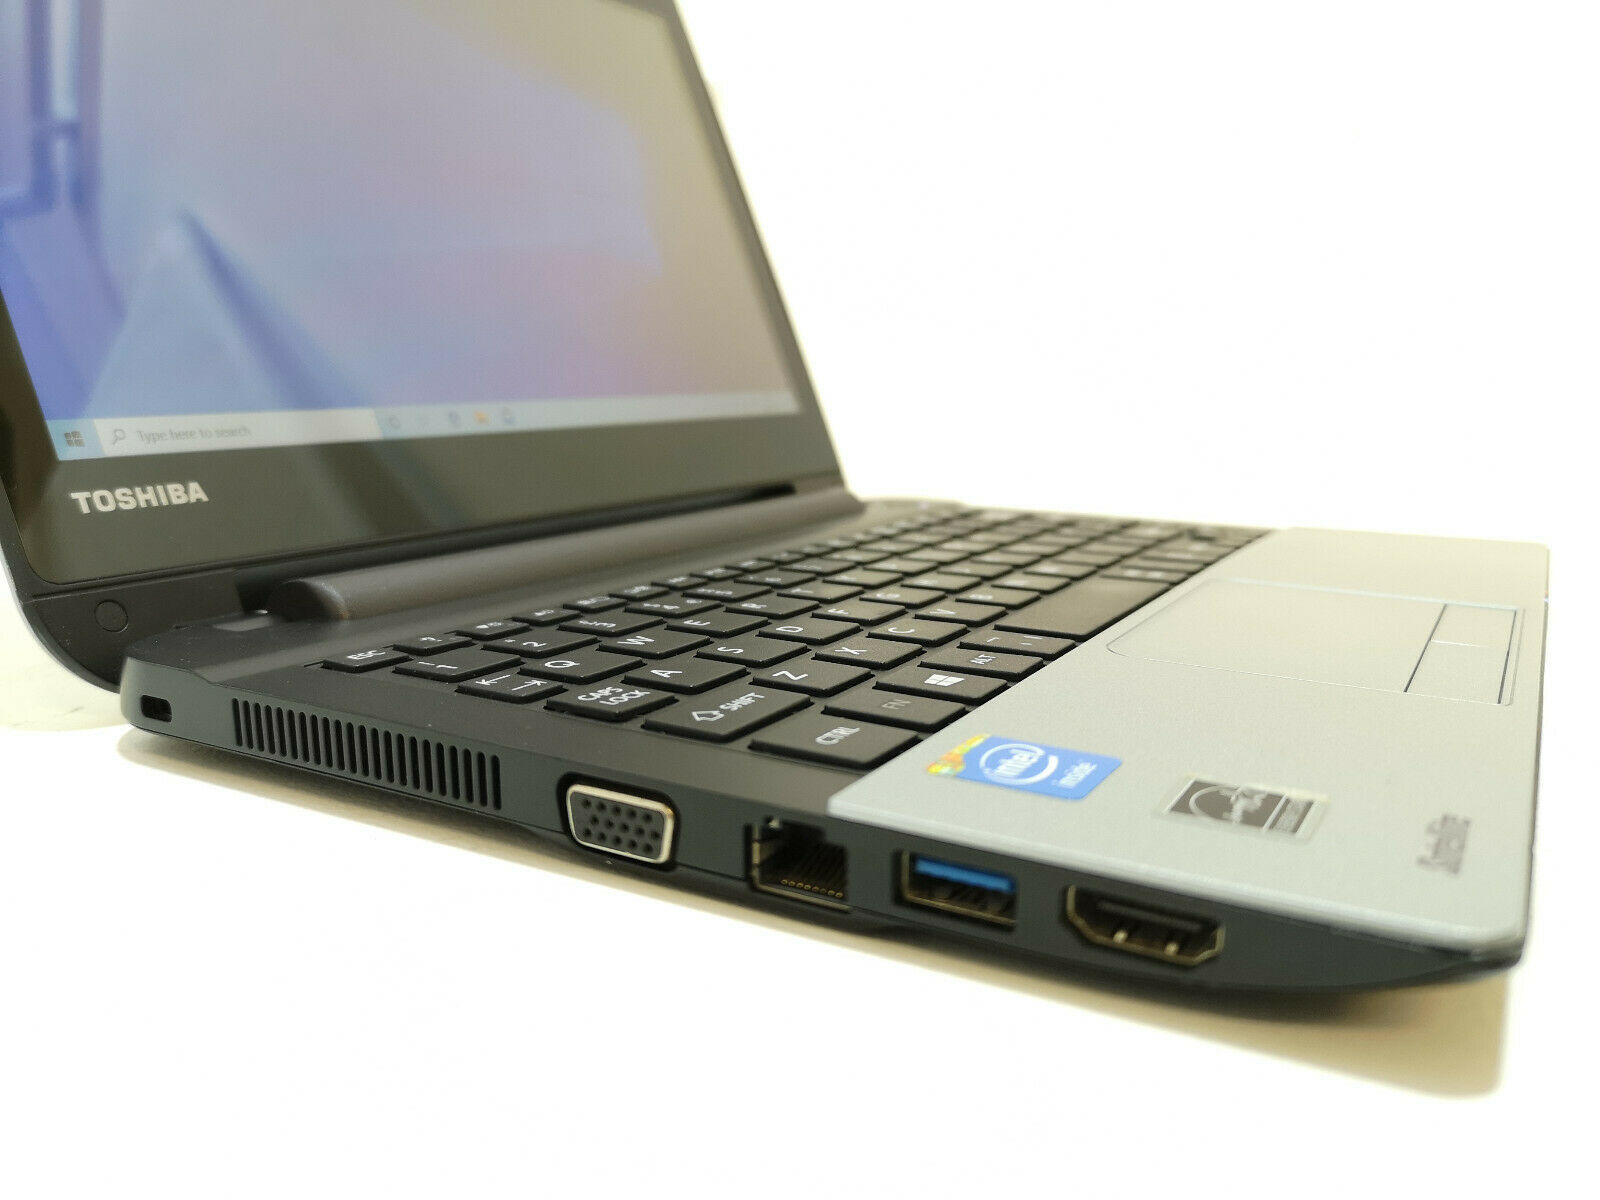 Refurbished Toshiba Sat NB10t-A-101 Laptop PC